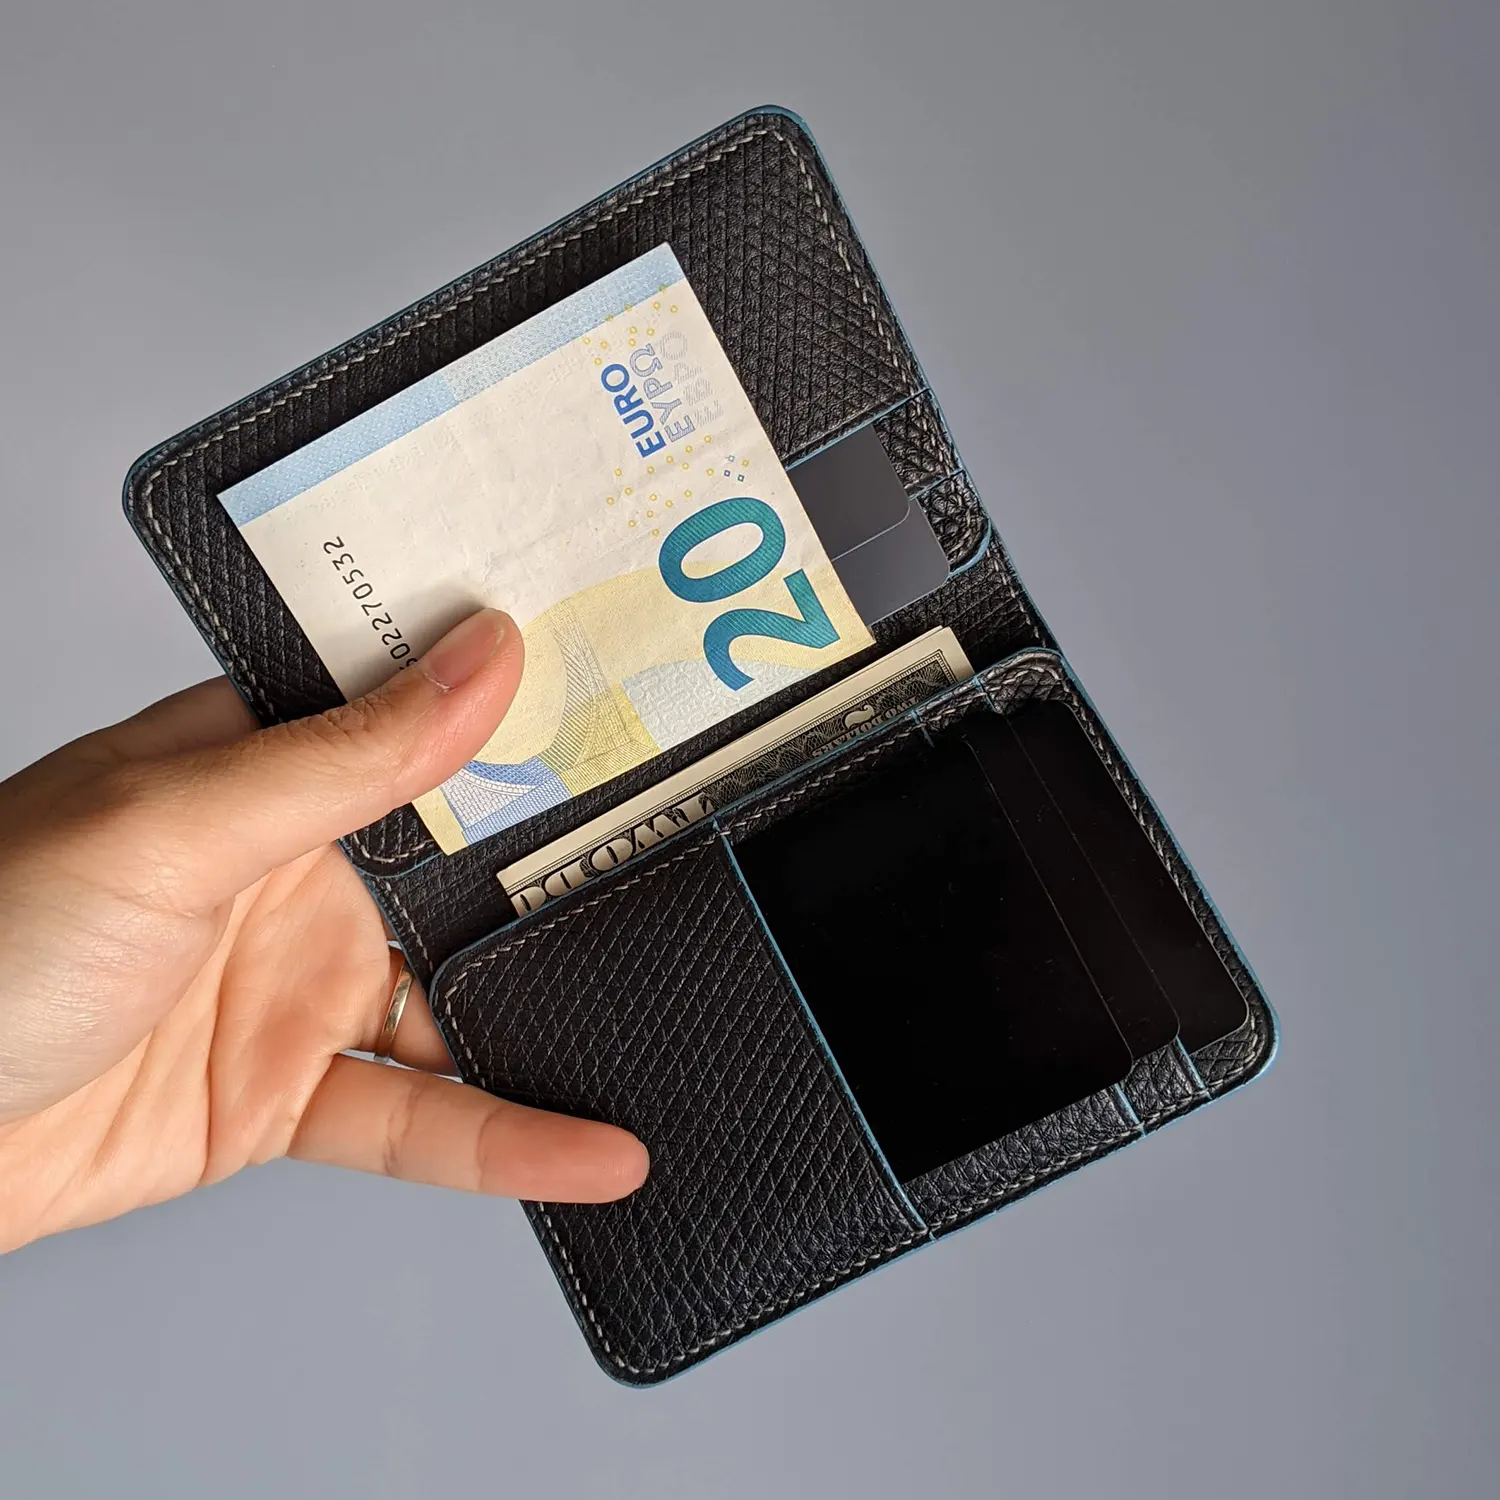 possala designs pocket organizer letather wallet